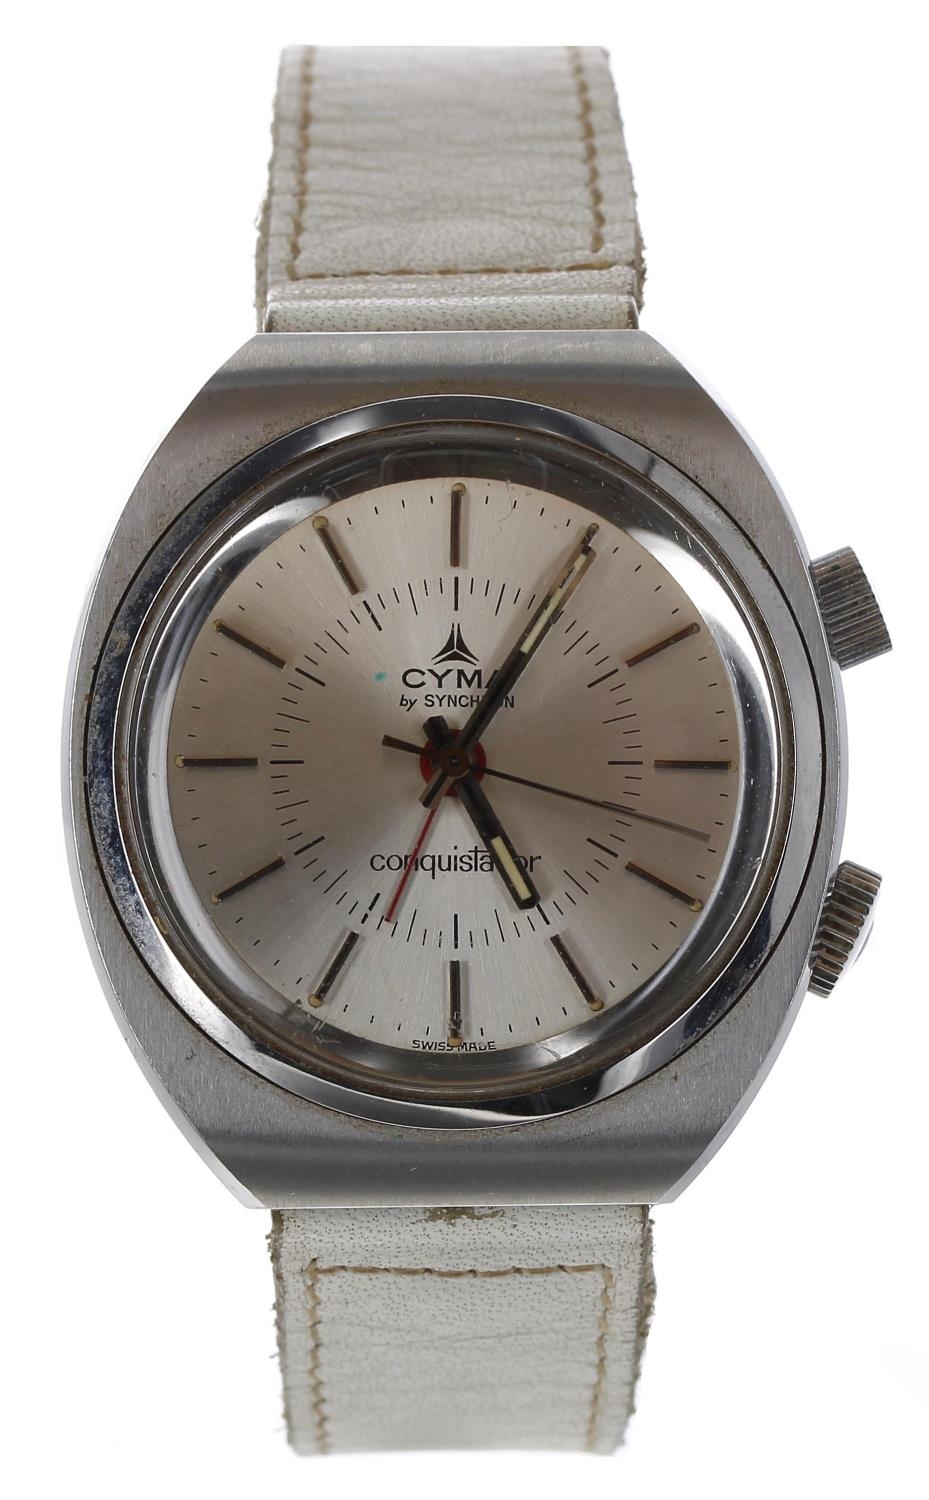 Cyma by Synchron Conquistador Alarm stainless steel gentleman's wristwatch, circular silvered